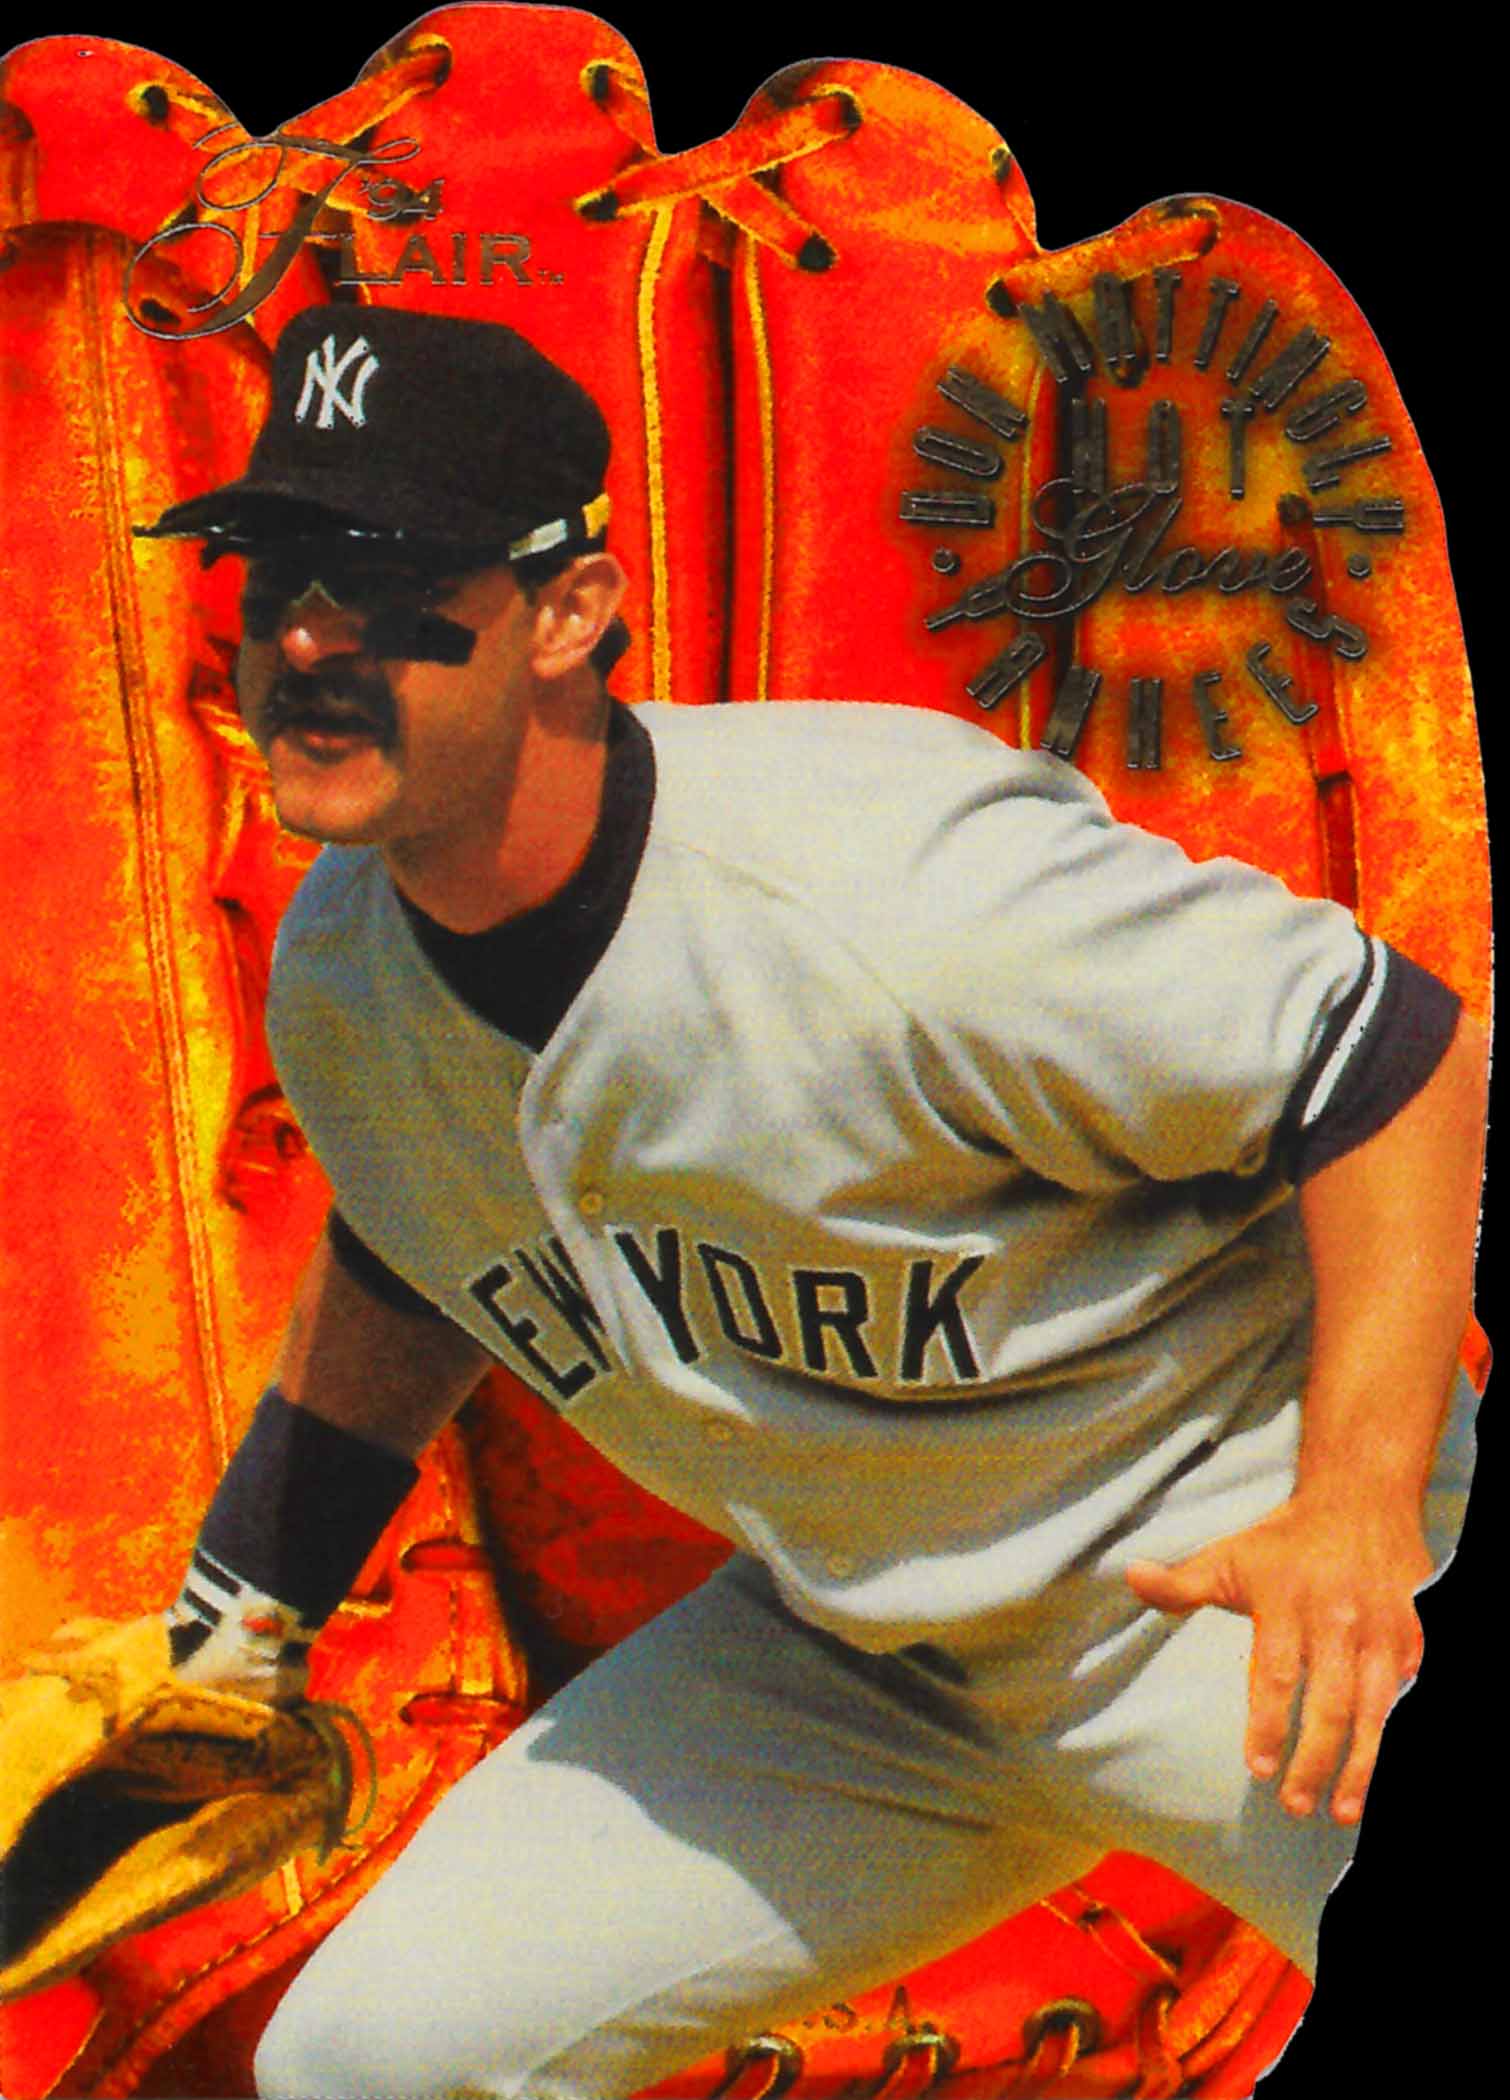 D37 Don Mattingly New York Yankees Batting Stance 8x10 11x14 16x20 Photo